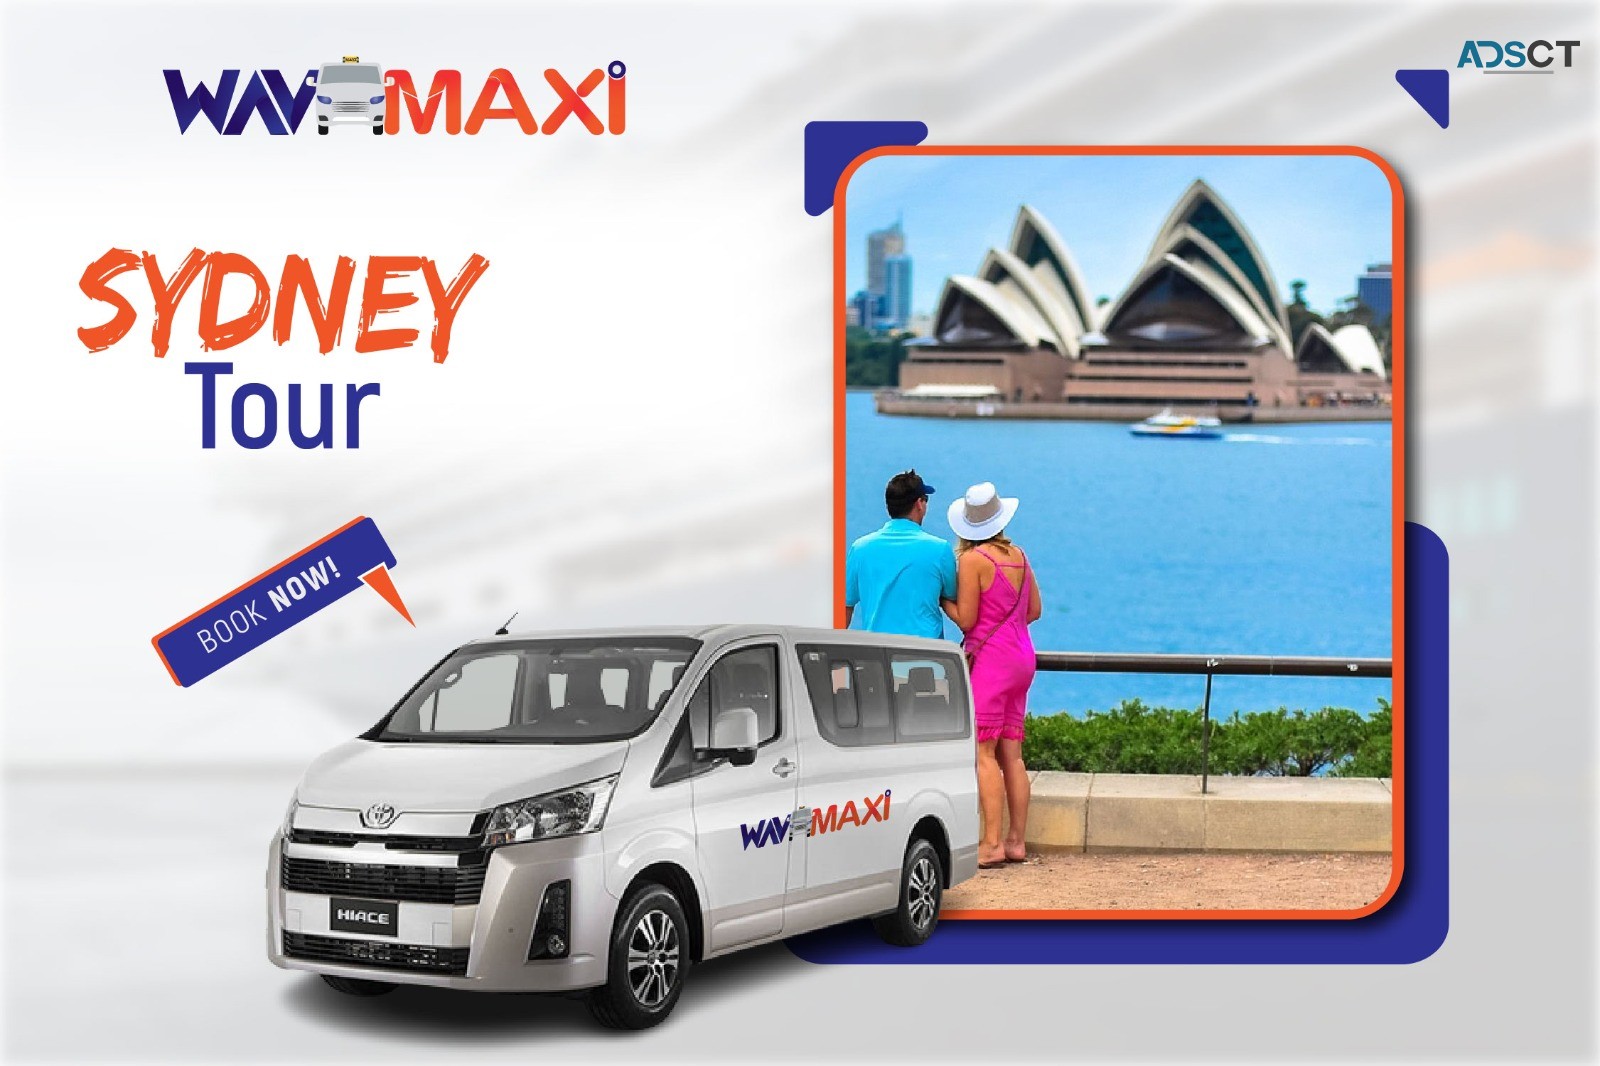 Maxi Taxi Sydney: Your Spacious Ride Awaits